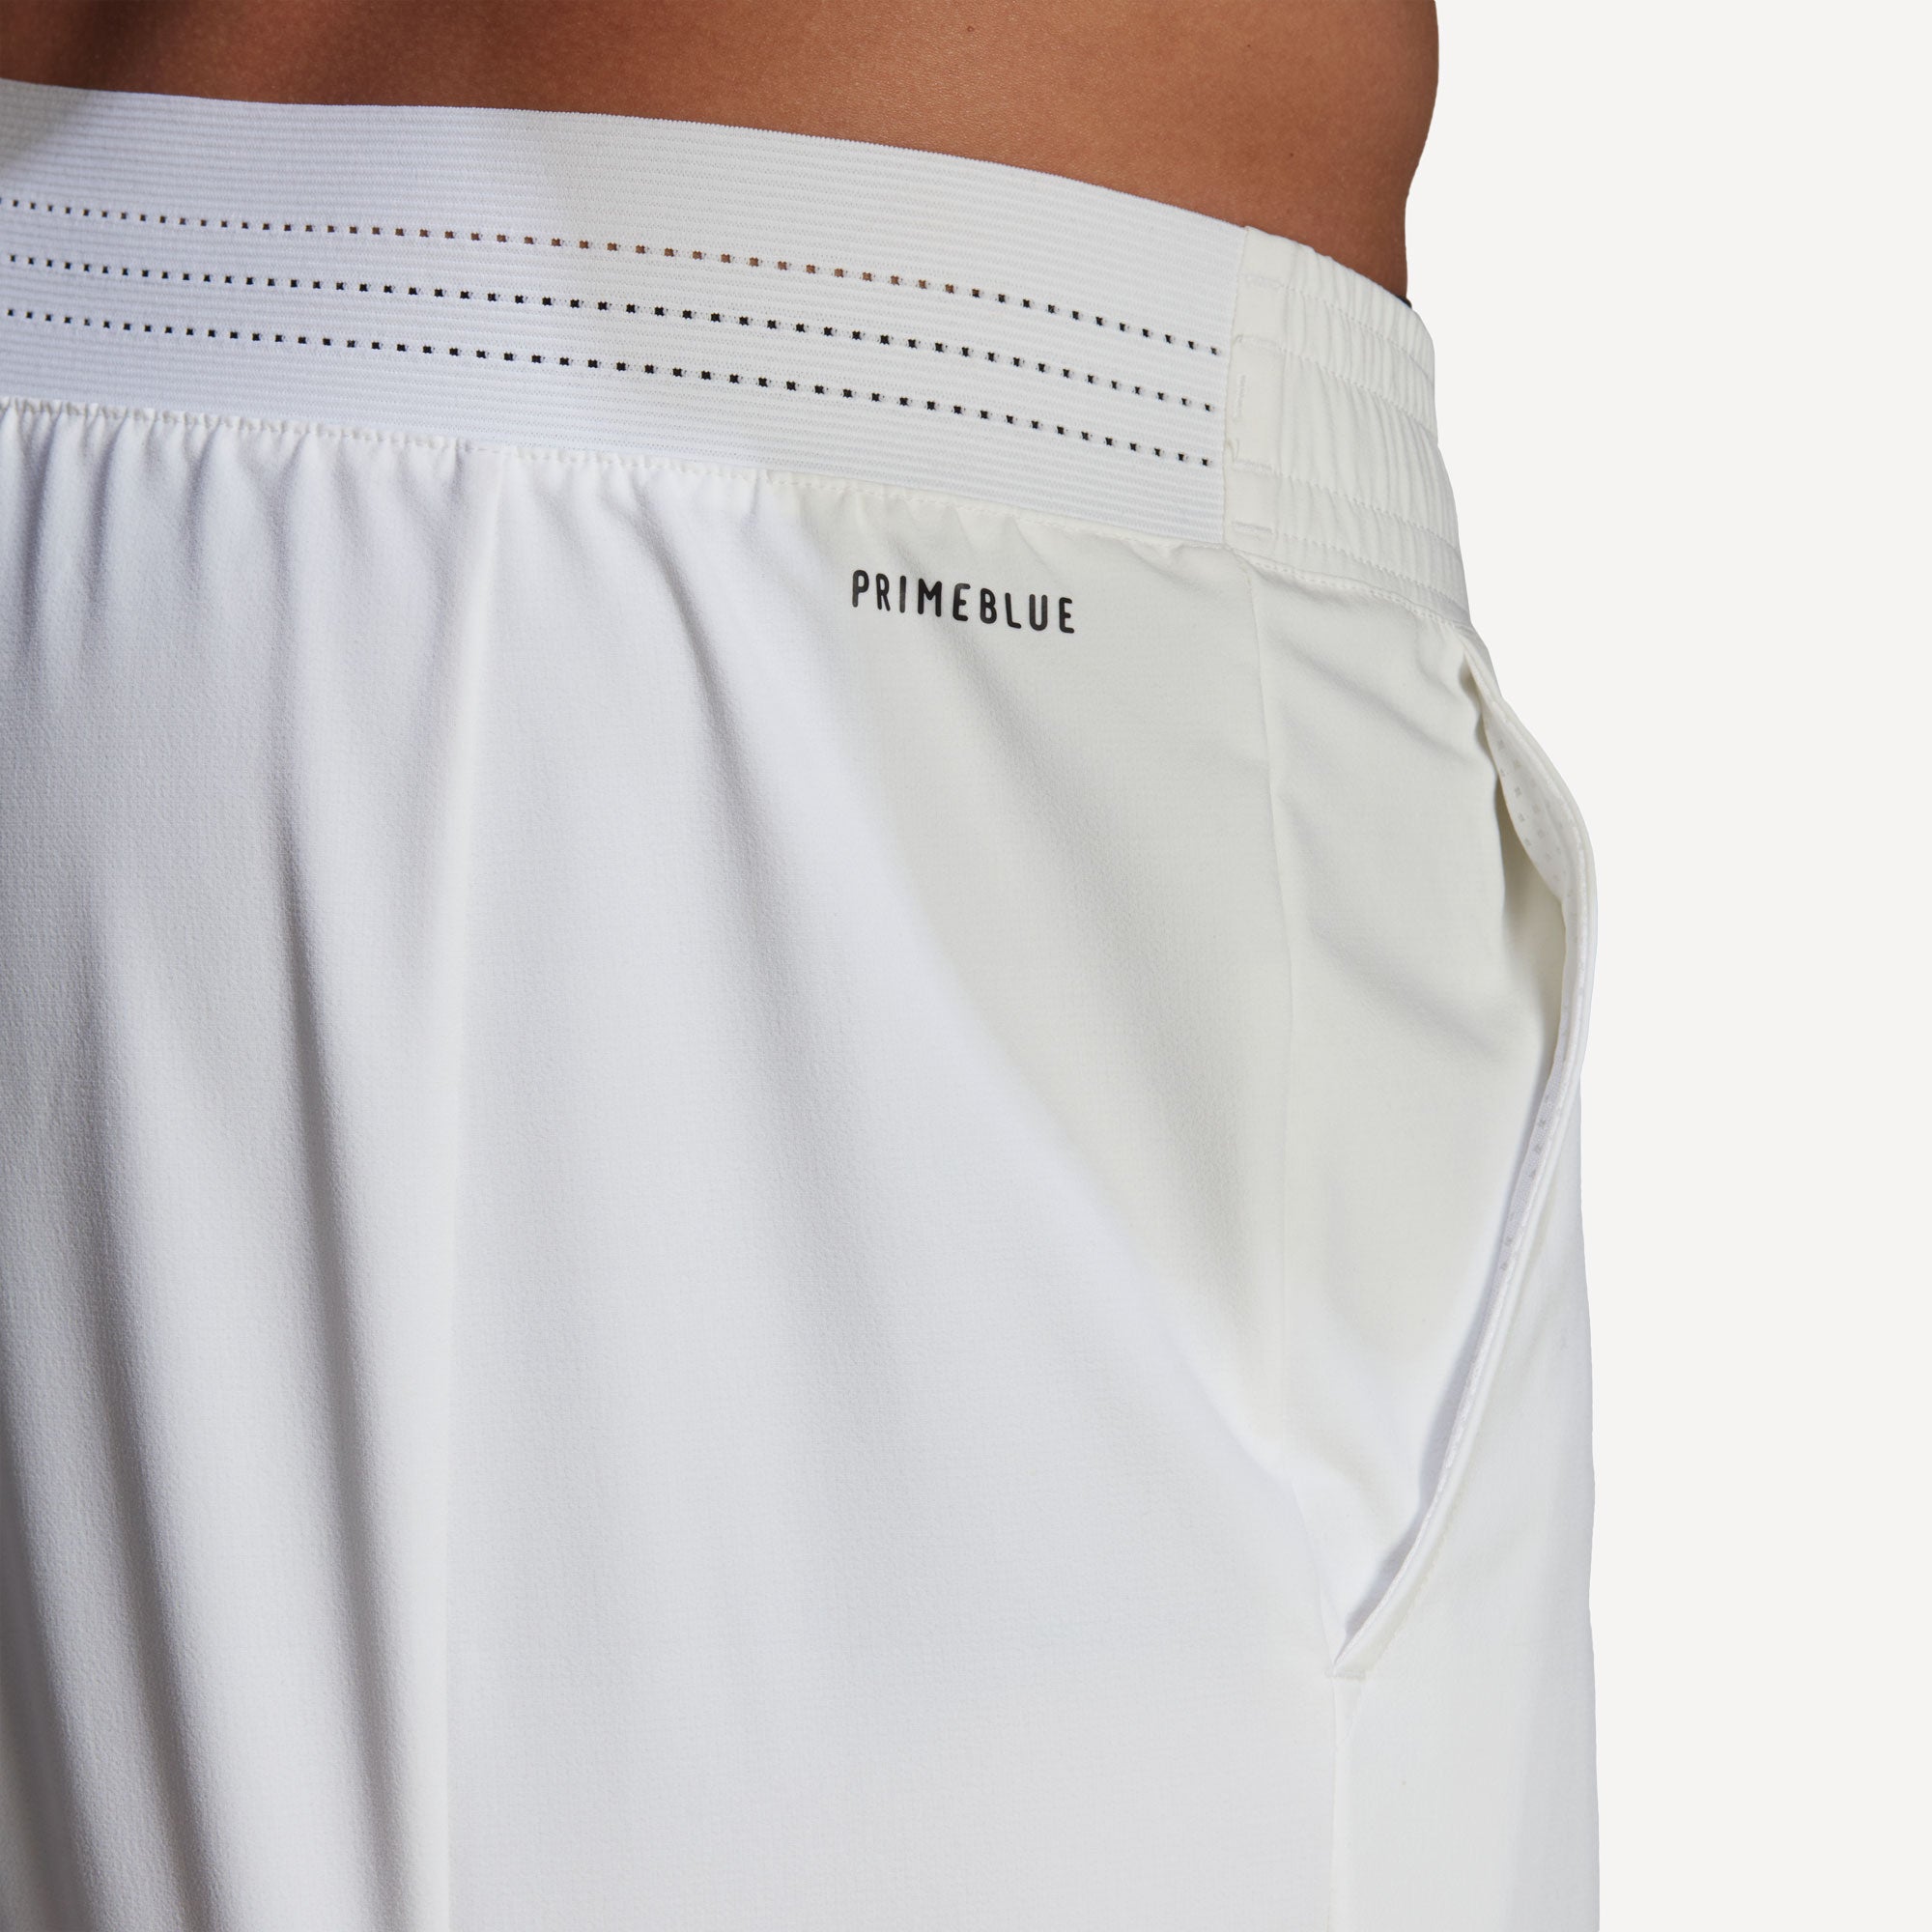 adidas Ergo Primeblue Men's 9-Inch Tennis Shorts White (4)